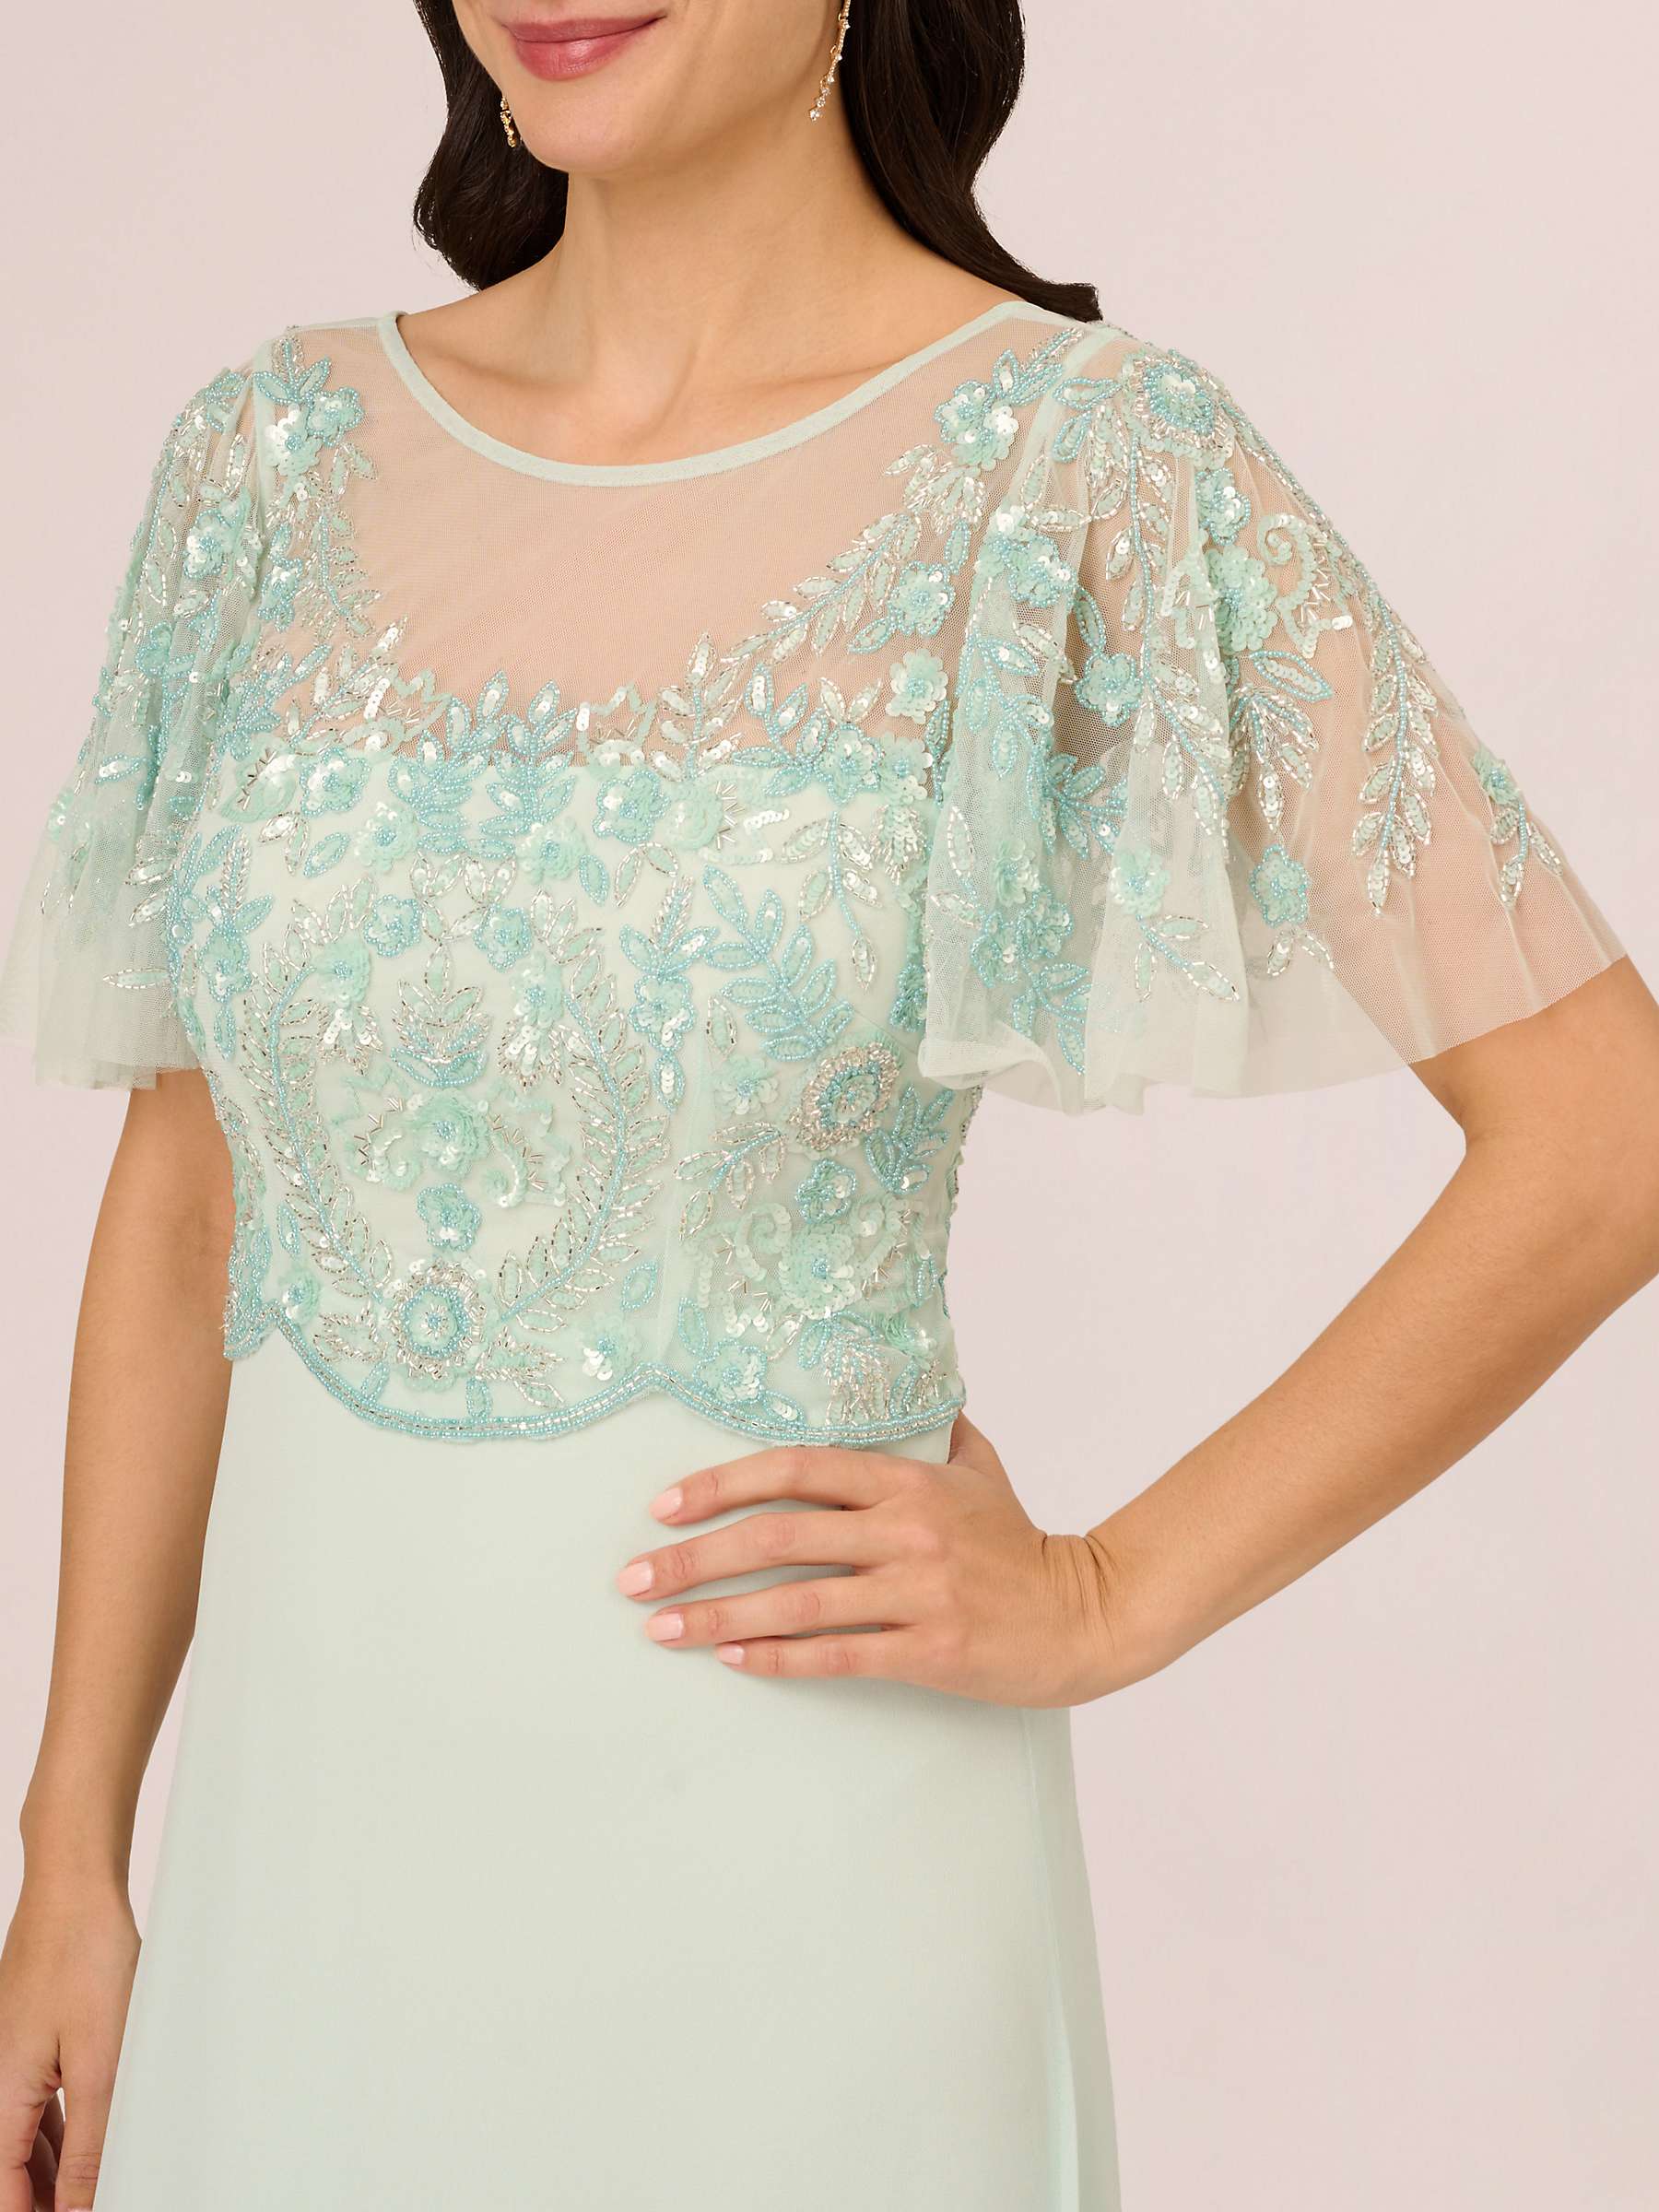 Buy Adrianna Papell Beaded Chiffon Maxi Dress, Mint Glass Online at johnlewis.com